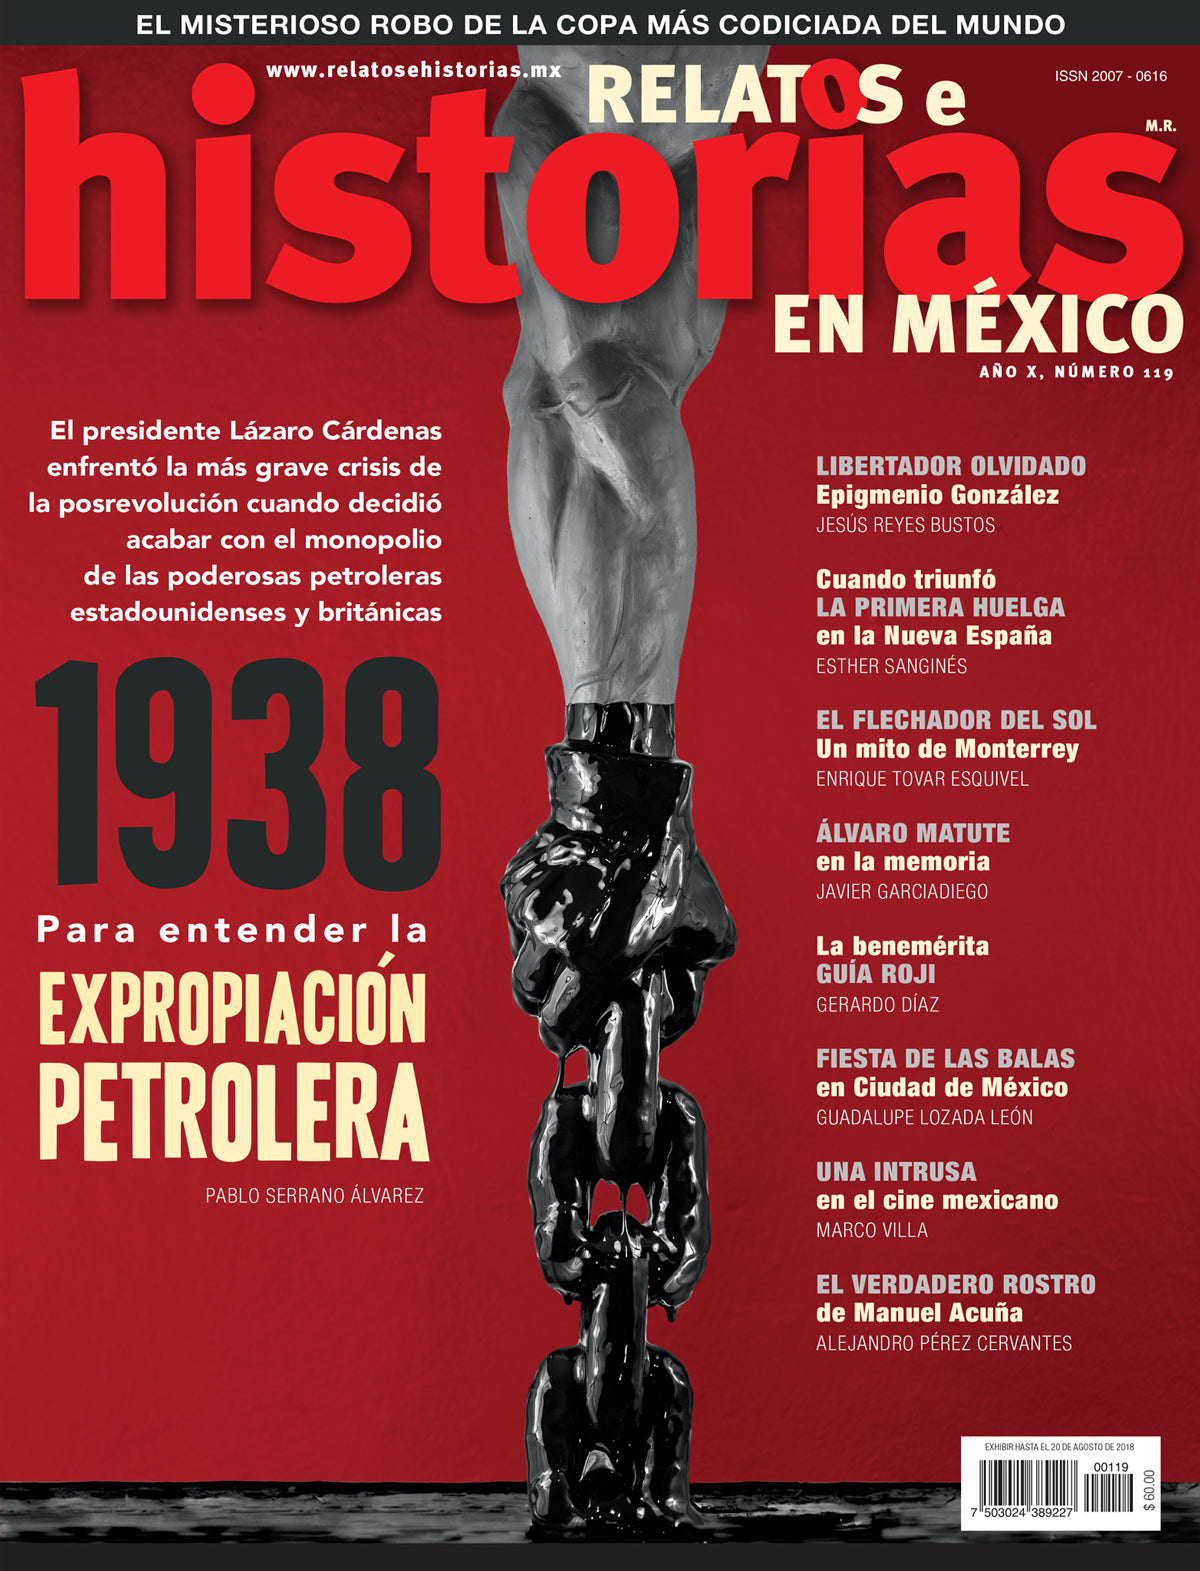 1938. Para entender la Expropiación Petrolera